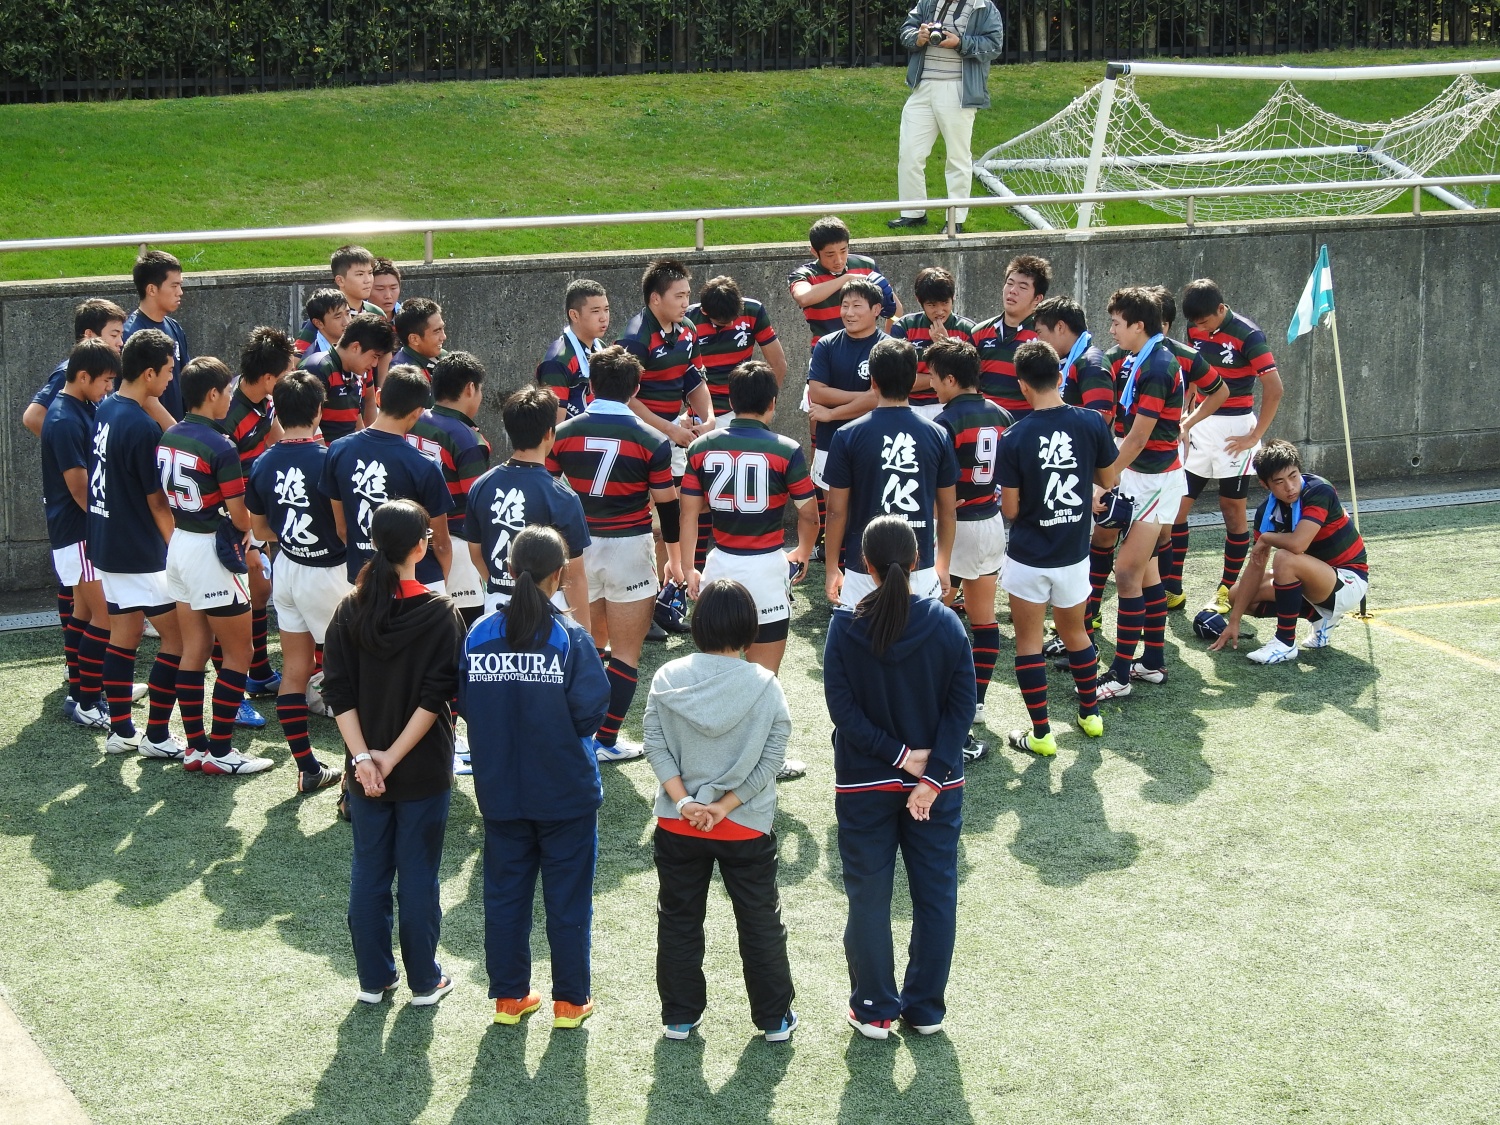 http://kokura-rugby.sakura.ne.jp/DSCN8500_xlarge.JPG